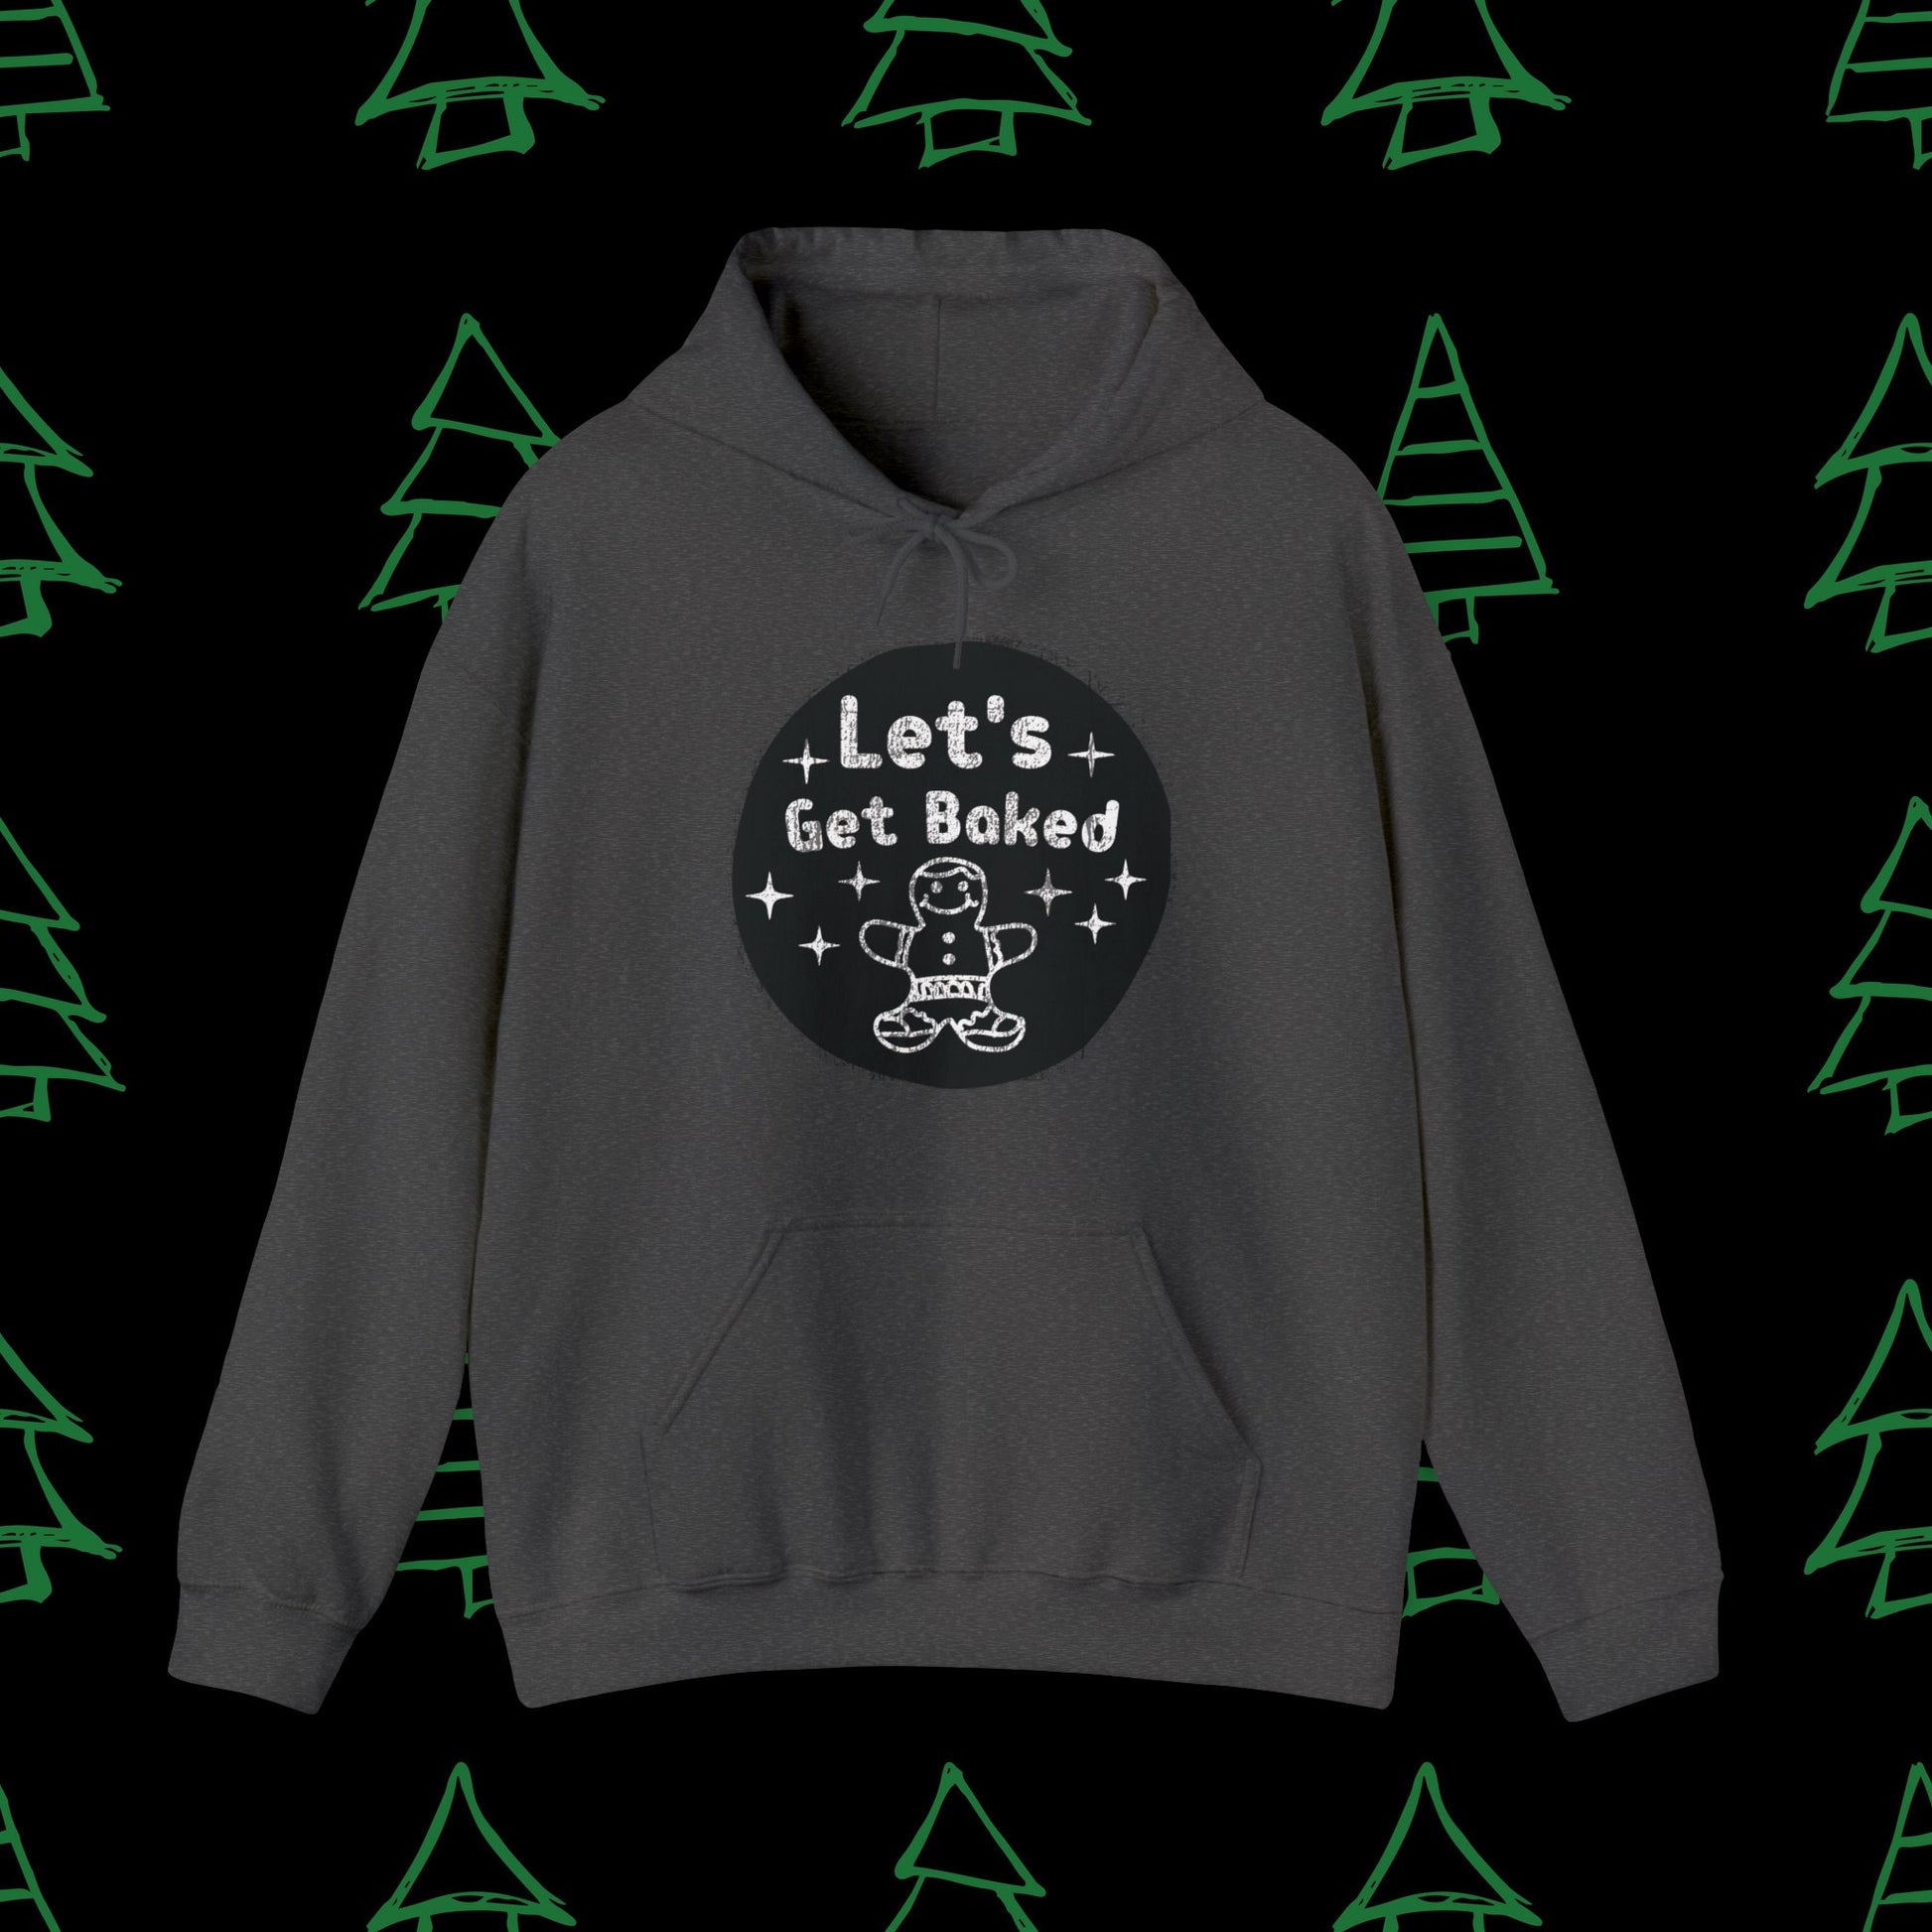 Christmas Hoodie - Let's Get Baked - Mens Christmas Shirts - Adult Christmas Hooded Sweatshirt Hooded Sweatshirt Graphic Avenue Dark Heather Adult Small 